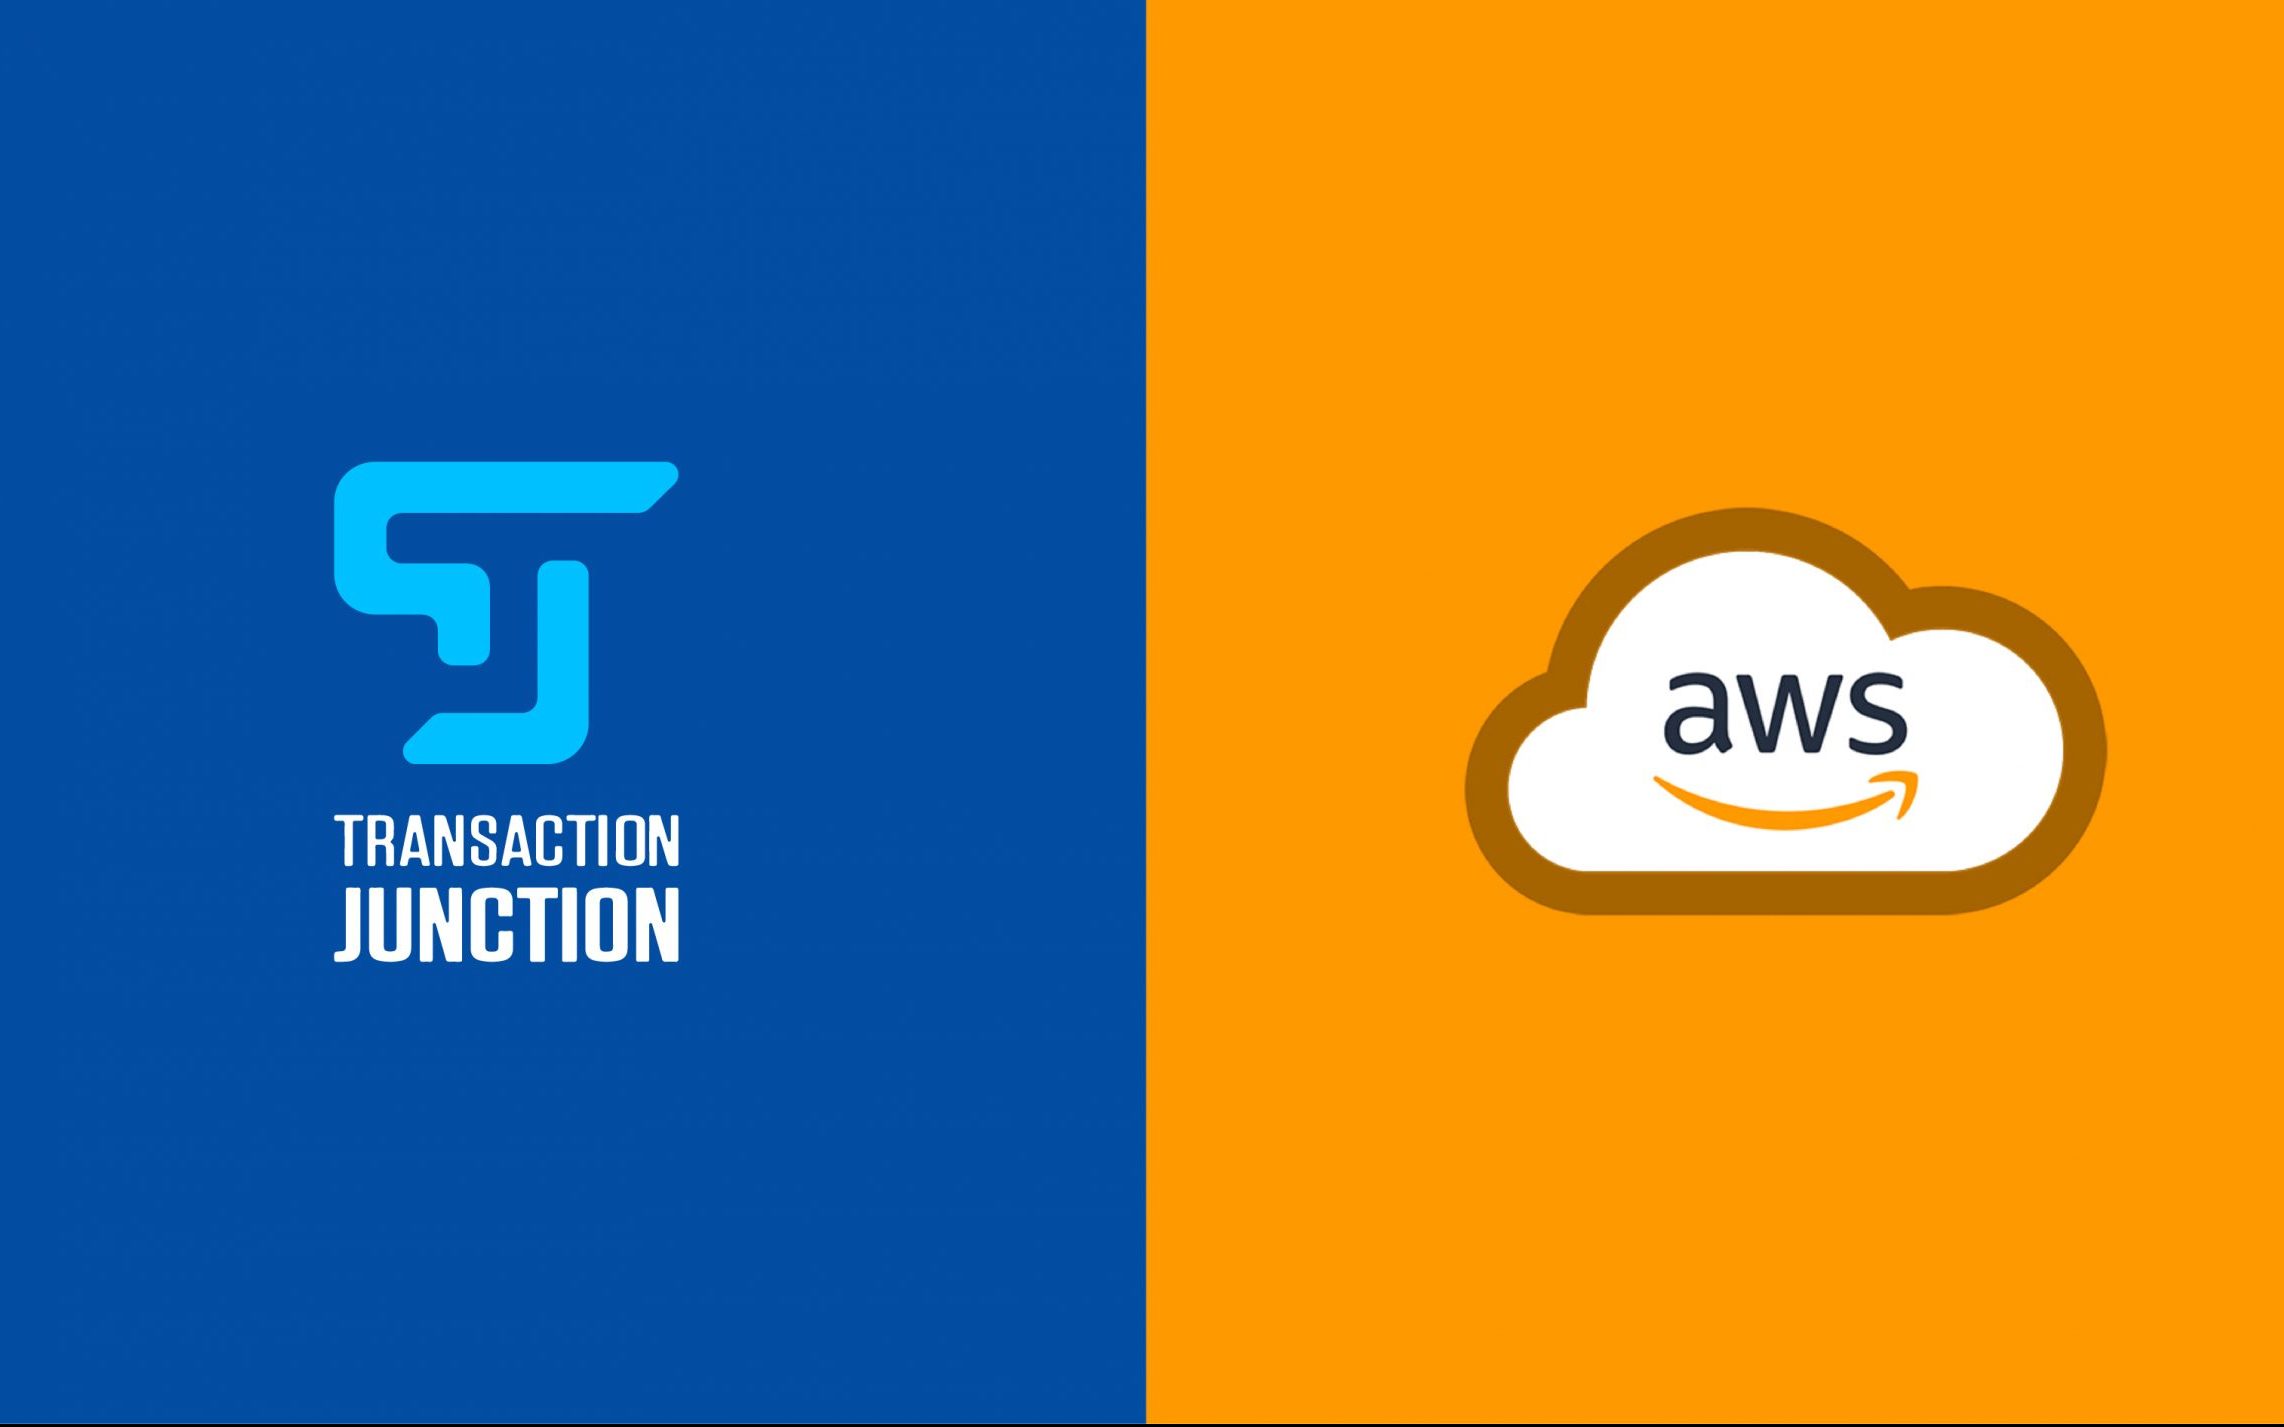 Payment Processor, Transaction Junction, provides seamless customer onboarding through AWS Cloud Platform